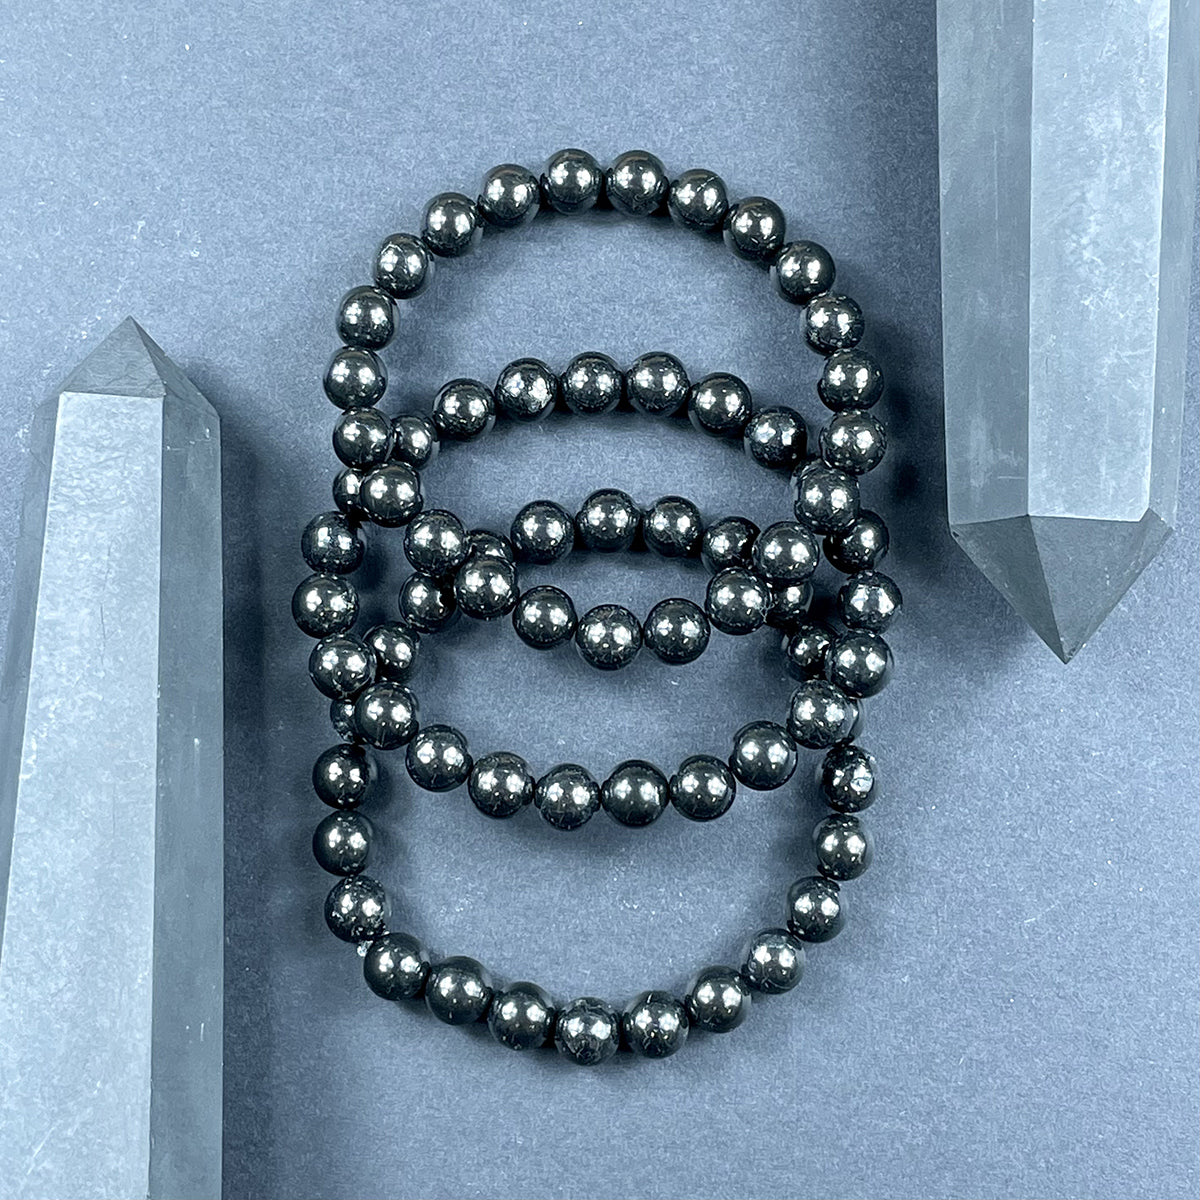 EMF Protection Elastic Bracelet - 8mm Beads